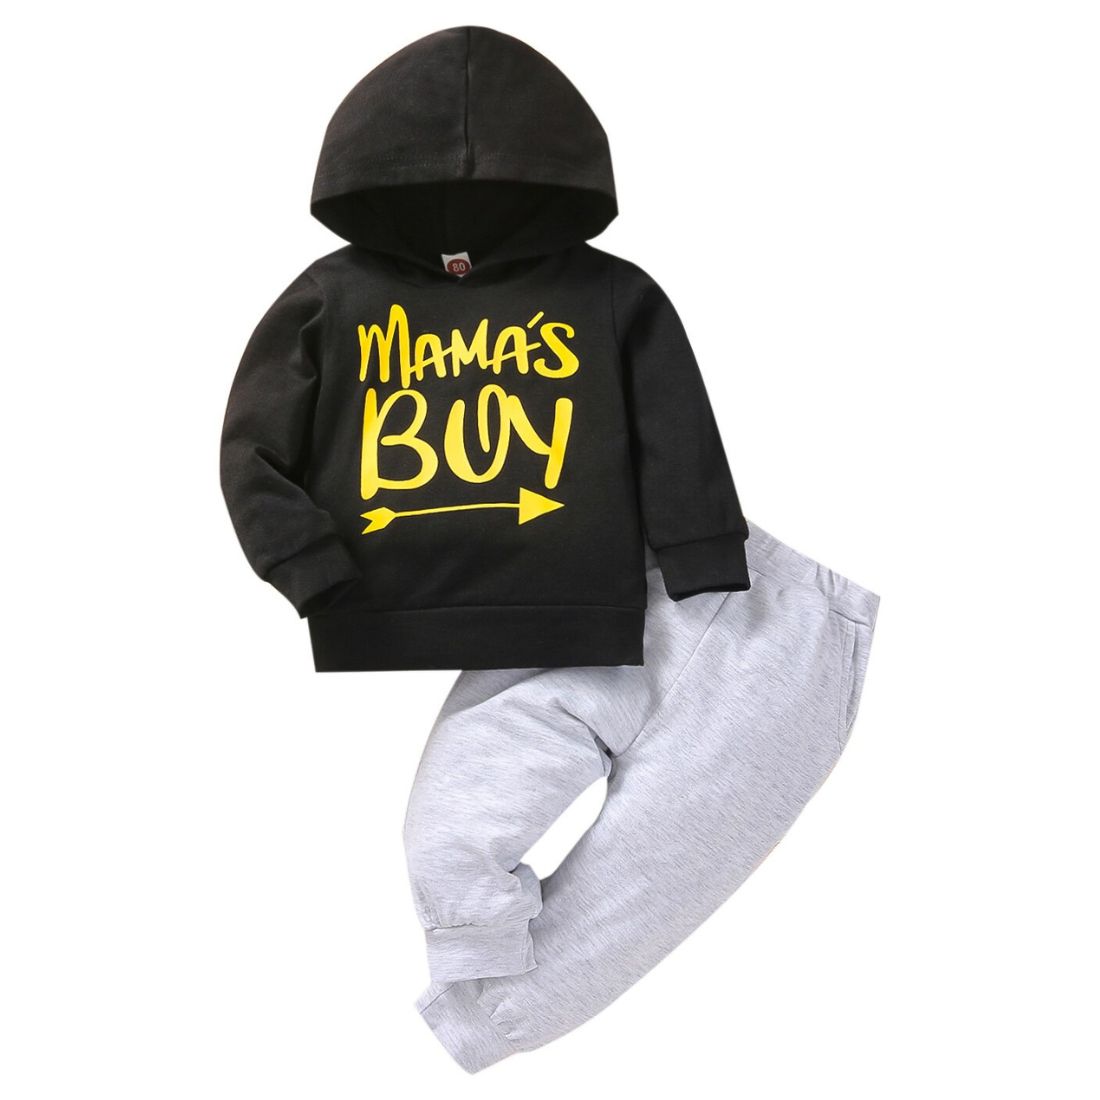 A baby boys black hooded sweatshirt and grey pants with mamas boys print